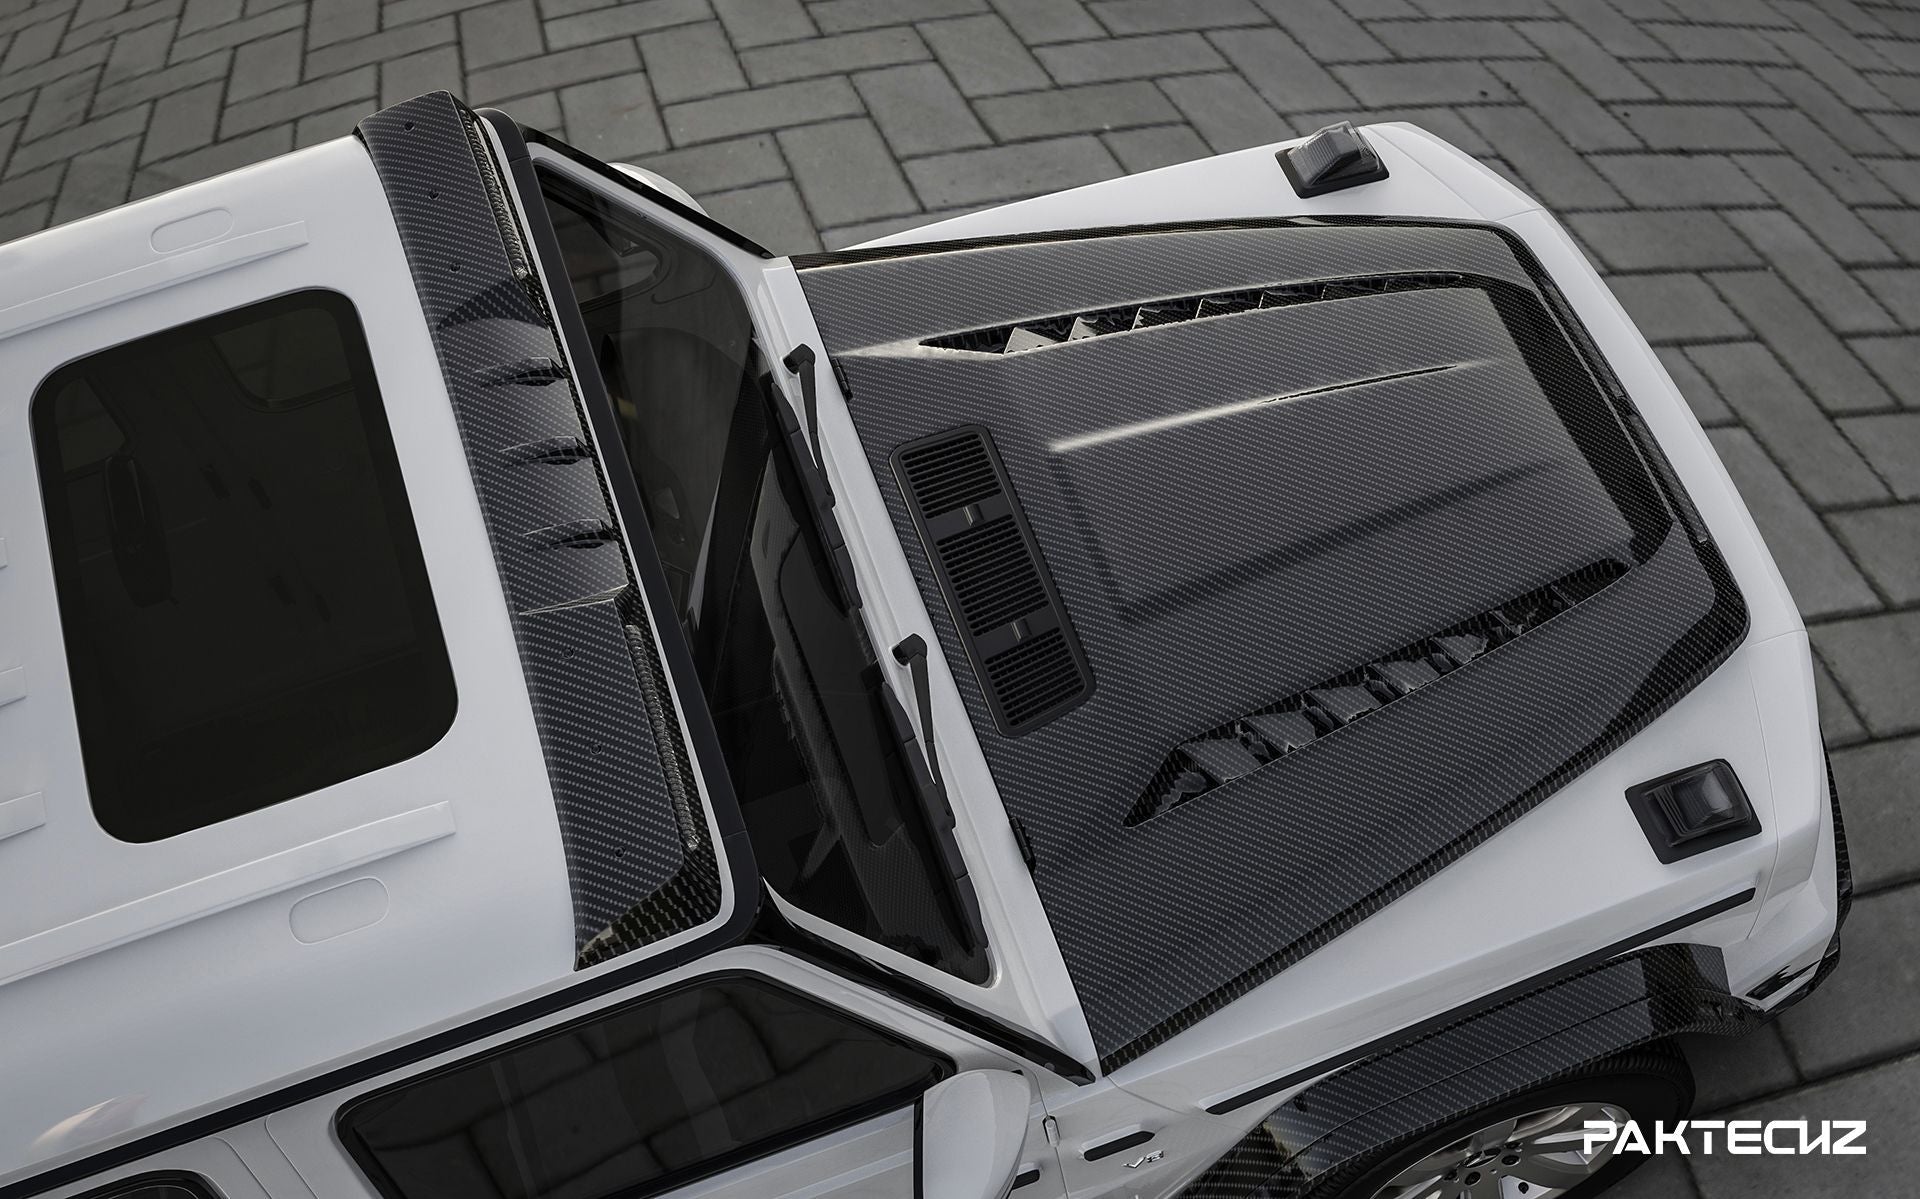 Paktechz Mercedes Benz G-Class Dry Carbon Fiber Front Spoiler